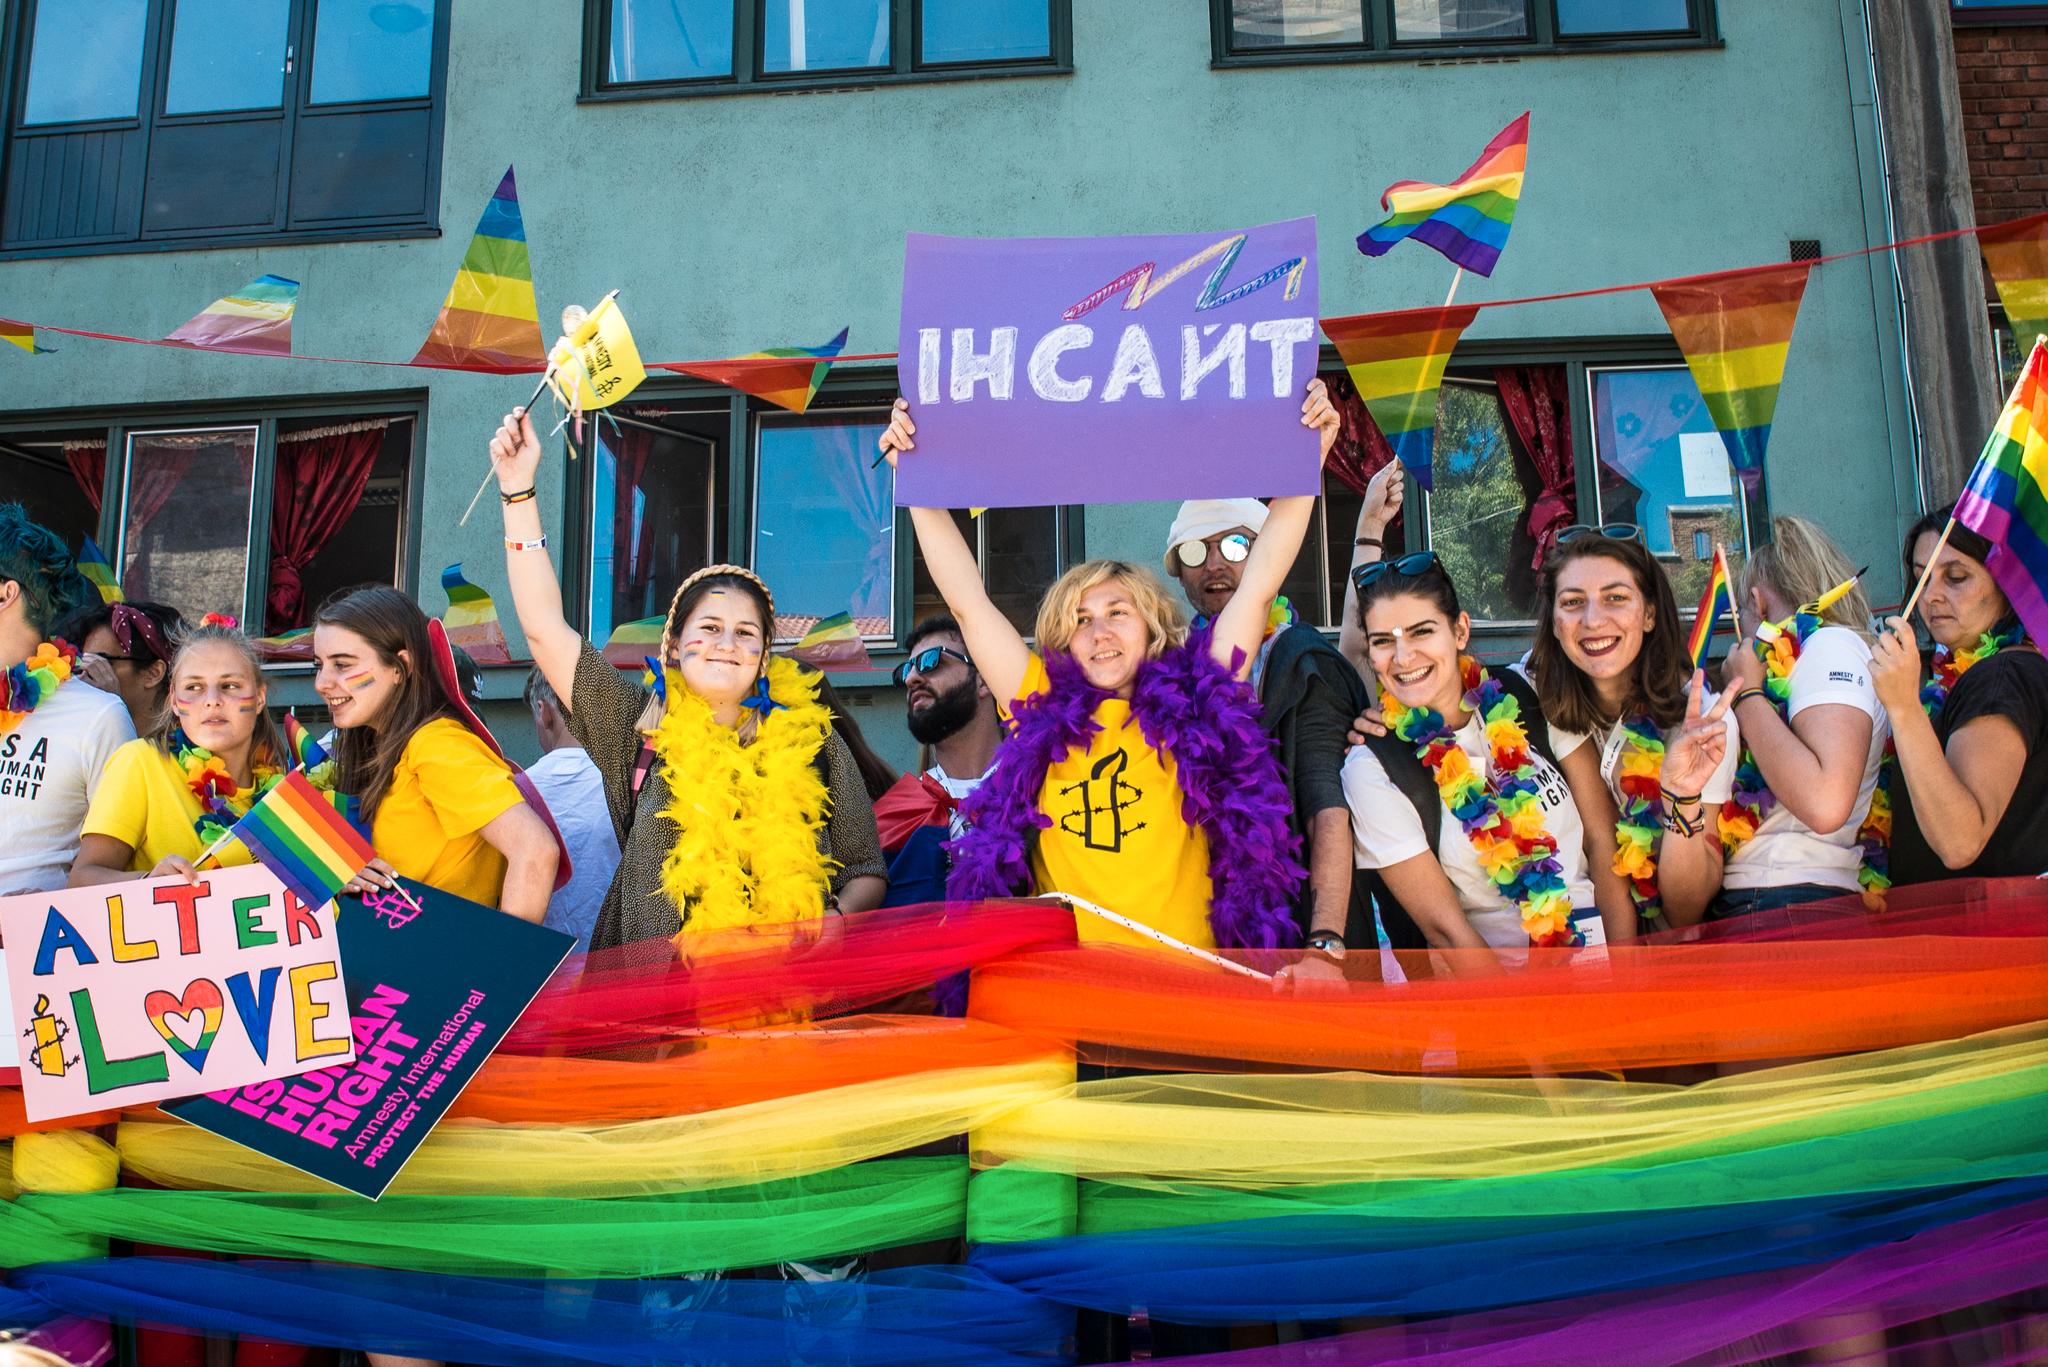  Vitalina Koval og Natalia Lobach (i midten) fra Ukraina deltok sammen med Amnesty International i paraden.  